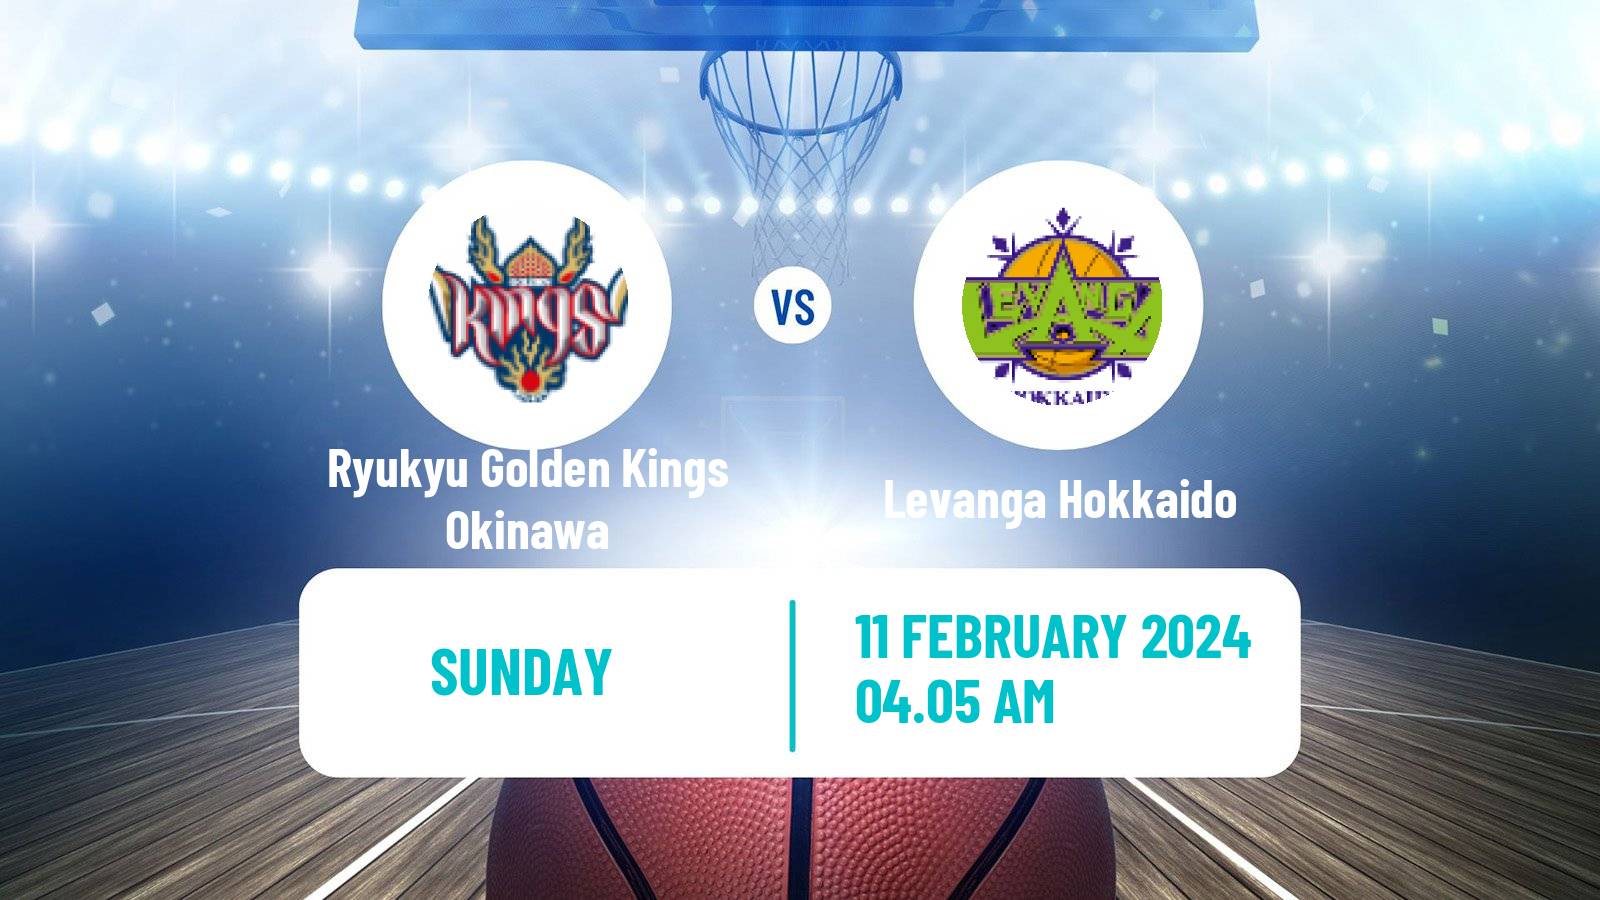 Basketball BJ League Ryukyu Golden Kings Okinawa - Levanga Hokkaido